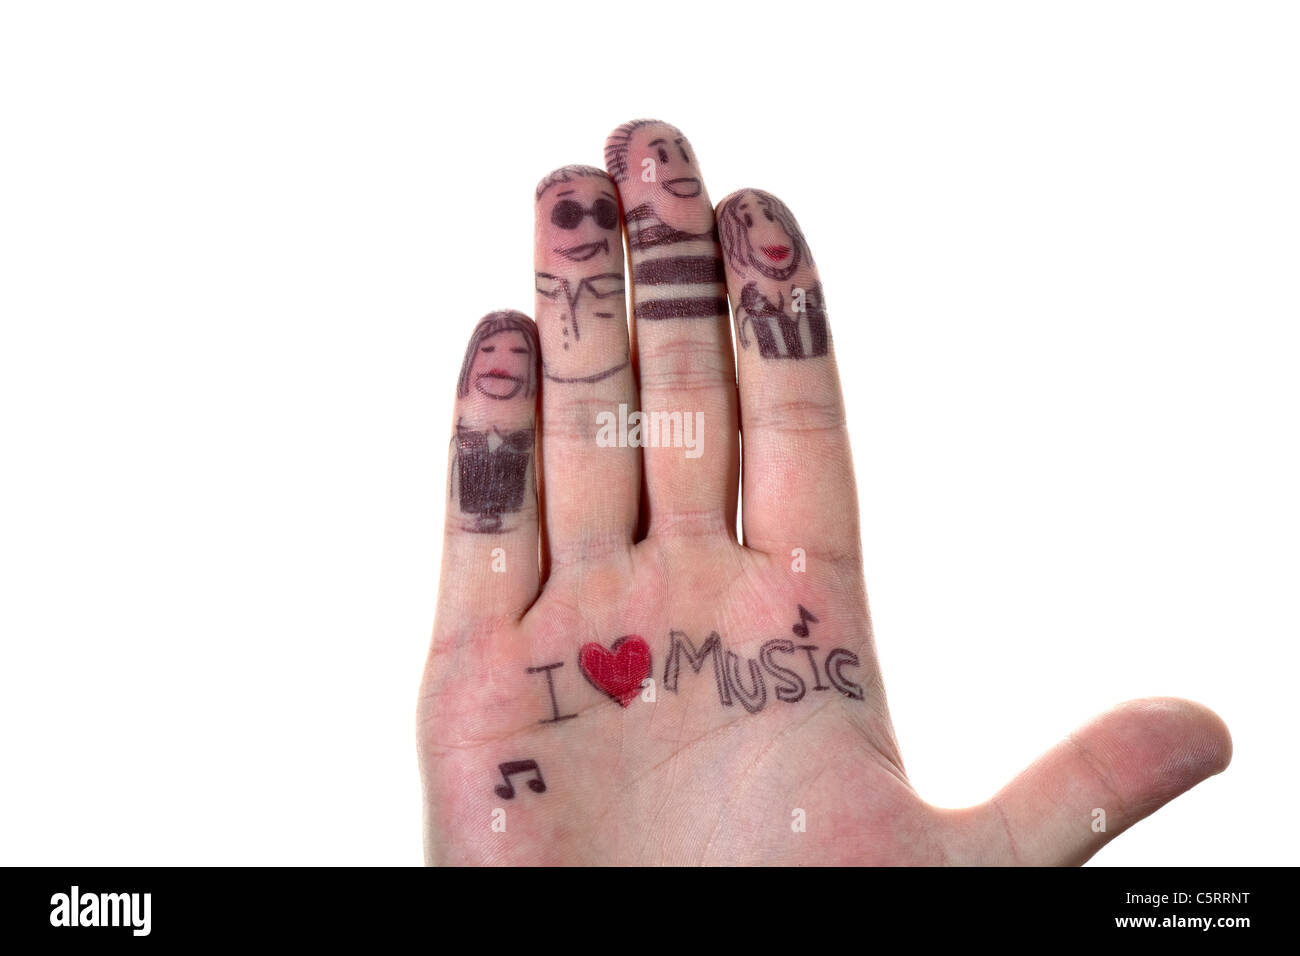 Would you get a finger tattoo? #fingertattoo | Instagram